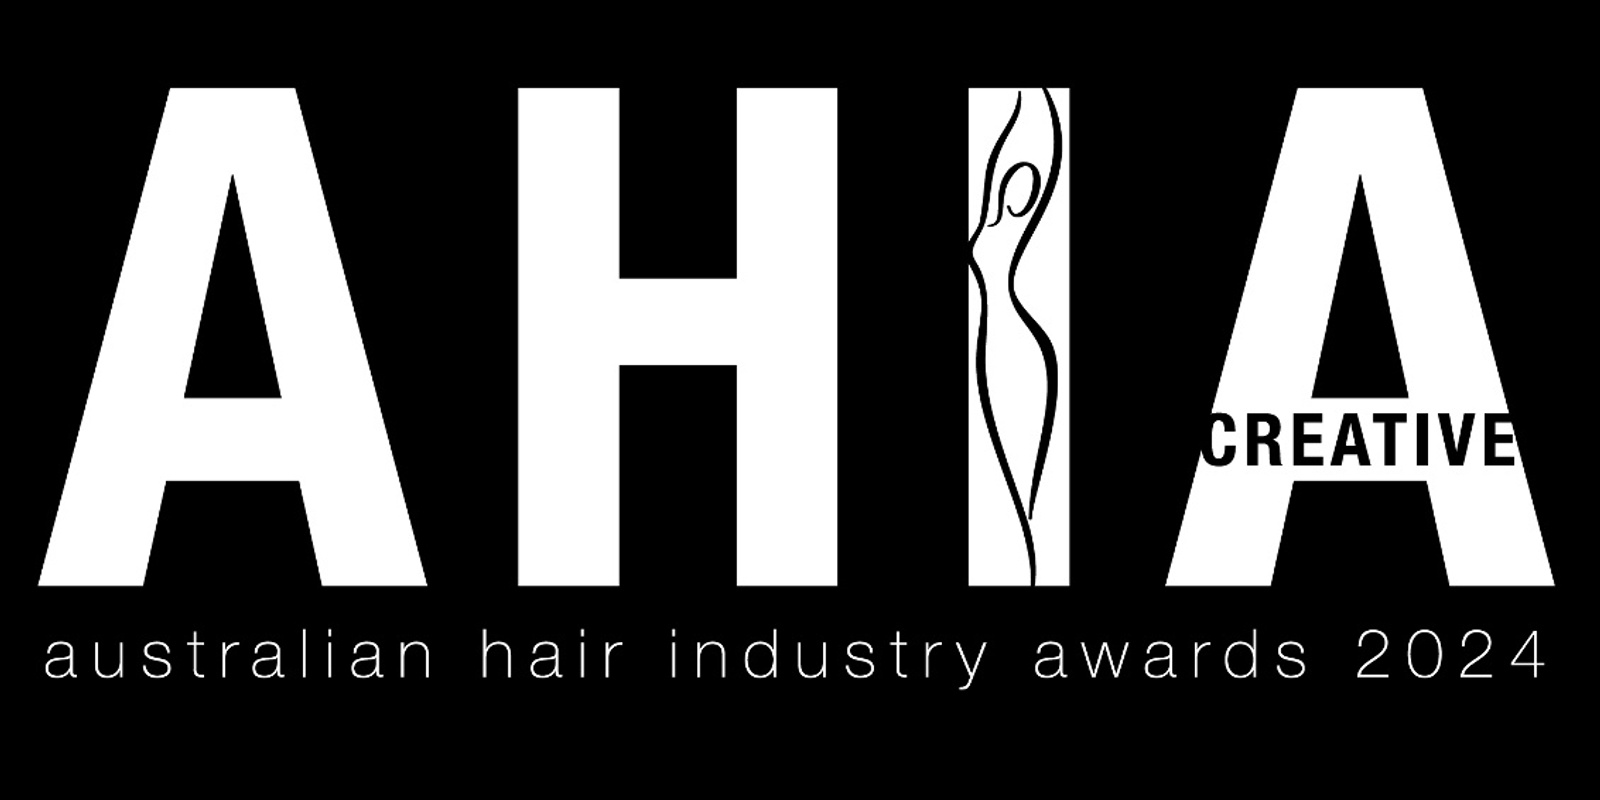 Banner image for 2024 AUSTRALIAN HAIR INDUSTRY AWARDS - CREATIVE